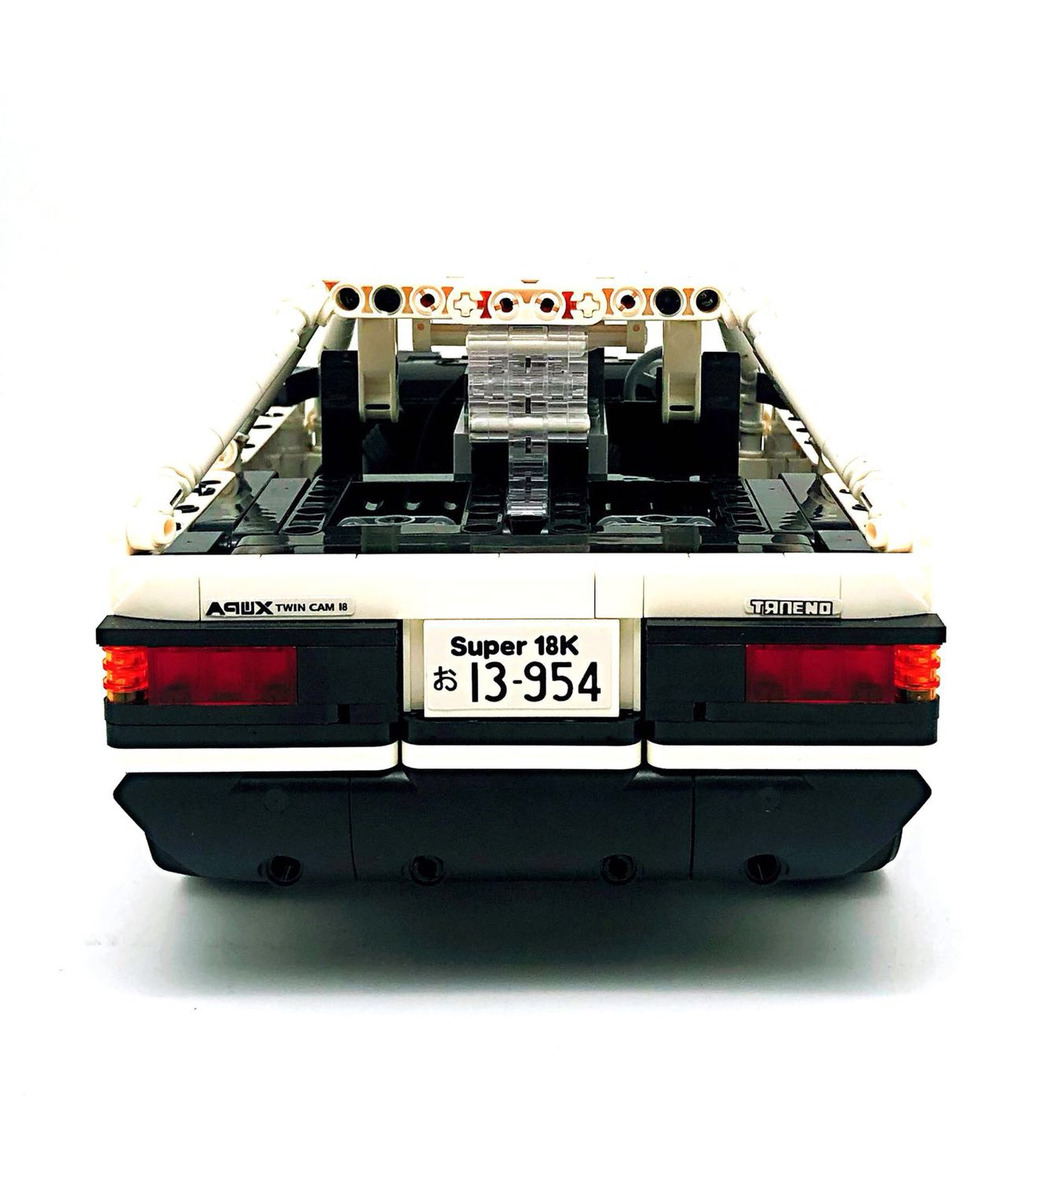  CaDA Toyota AE86 Initial D Toy Car Building Sets